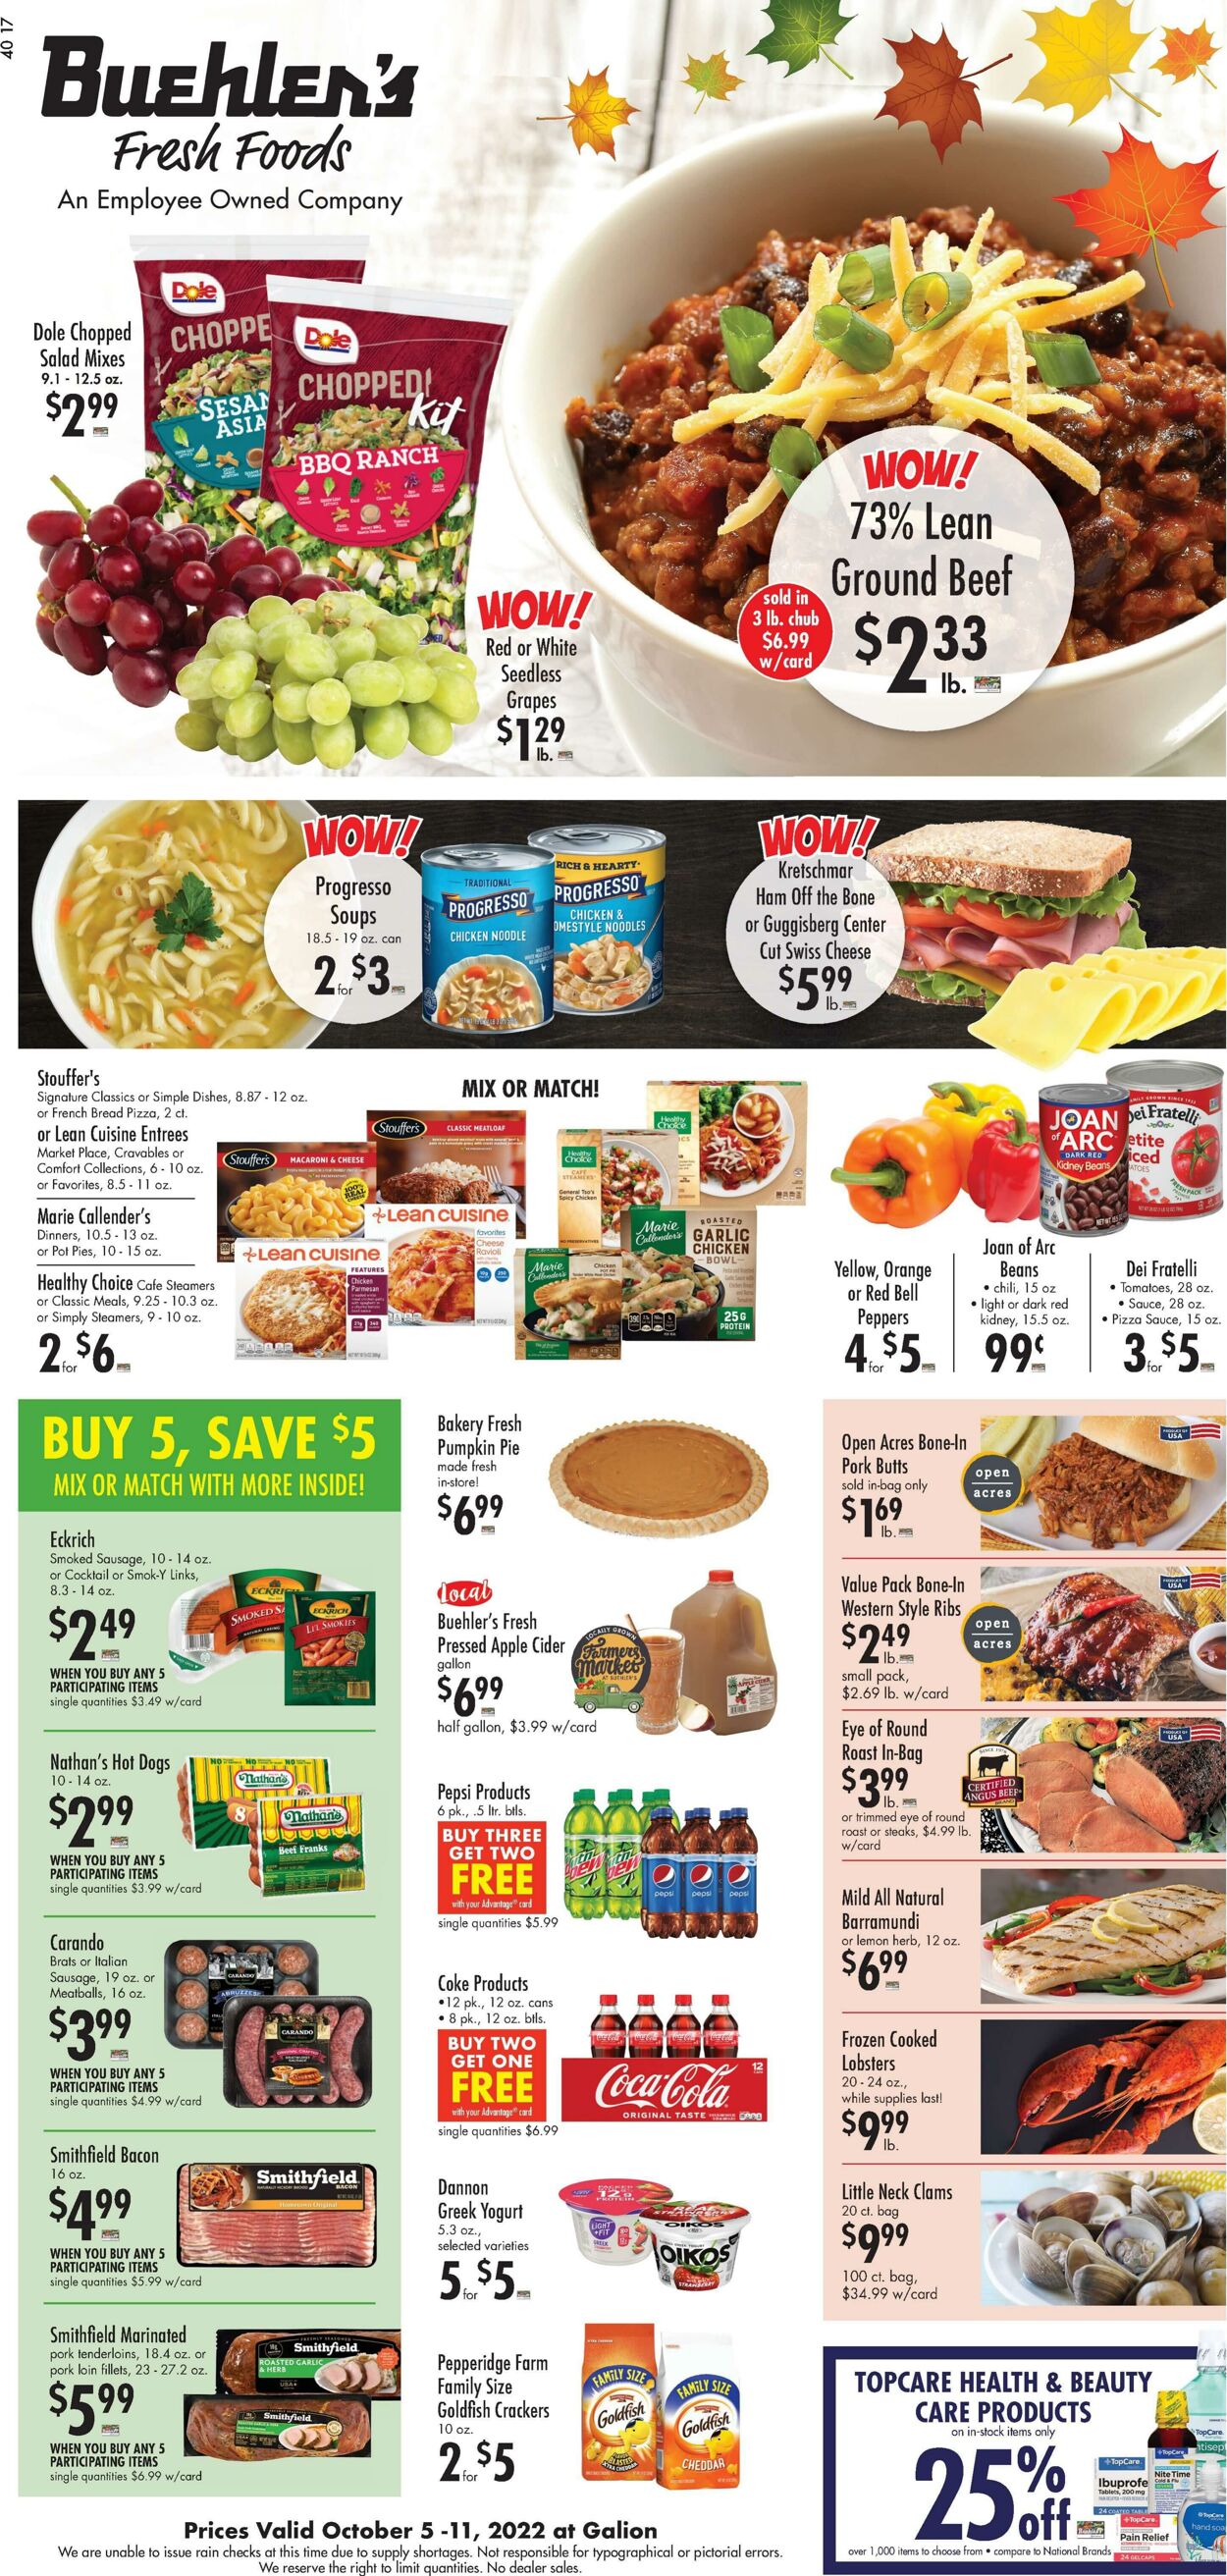 Weekly ad Buehler's Fresh Food 10/05/2022 - 10/11/2022